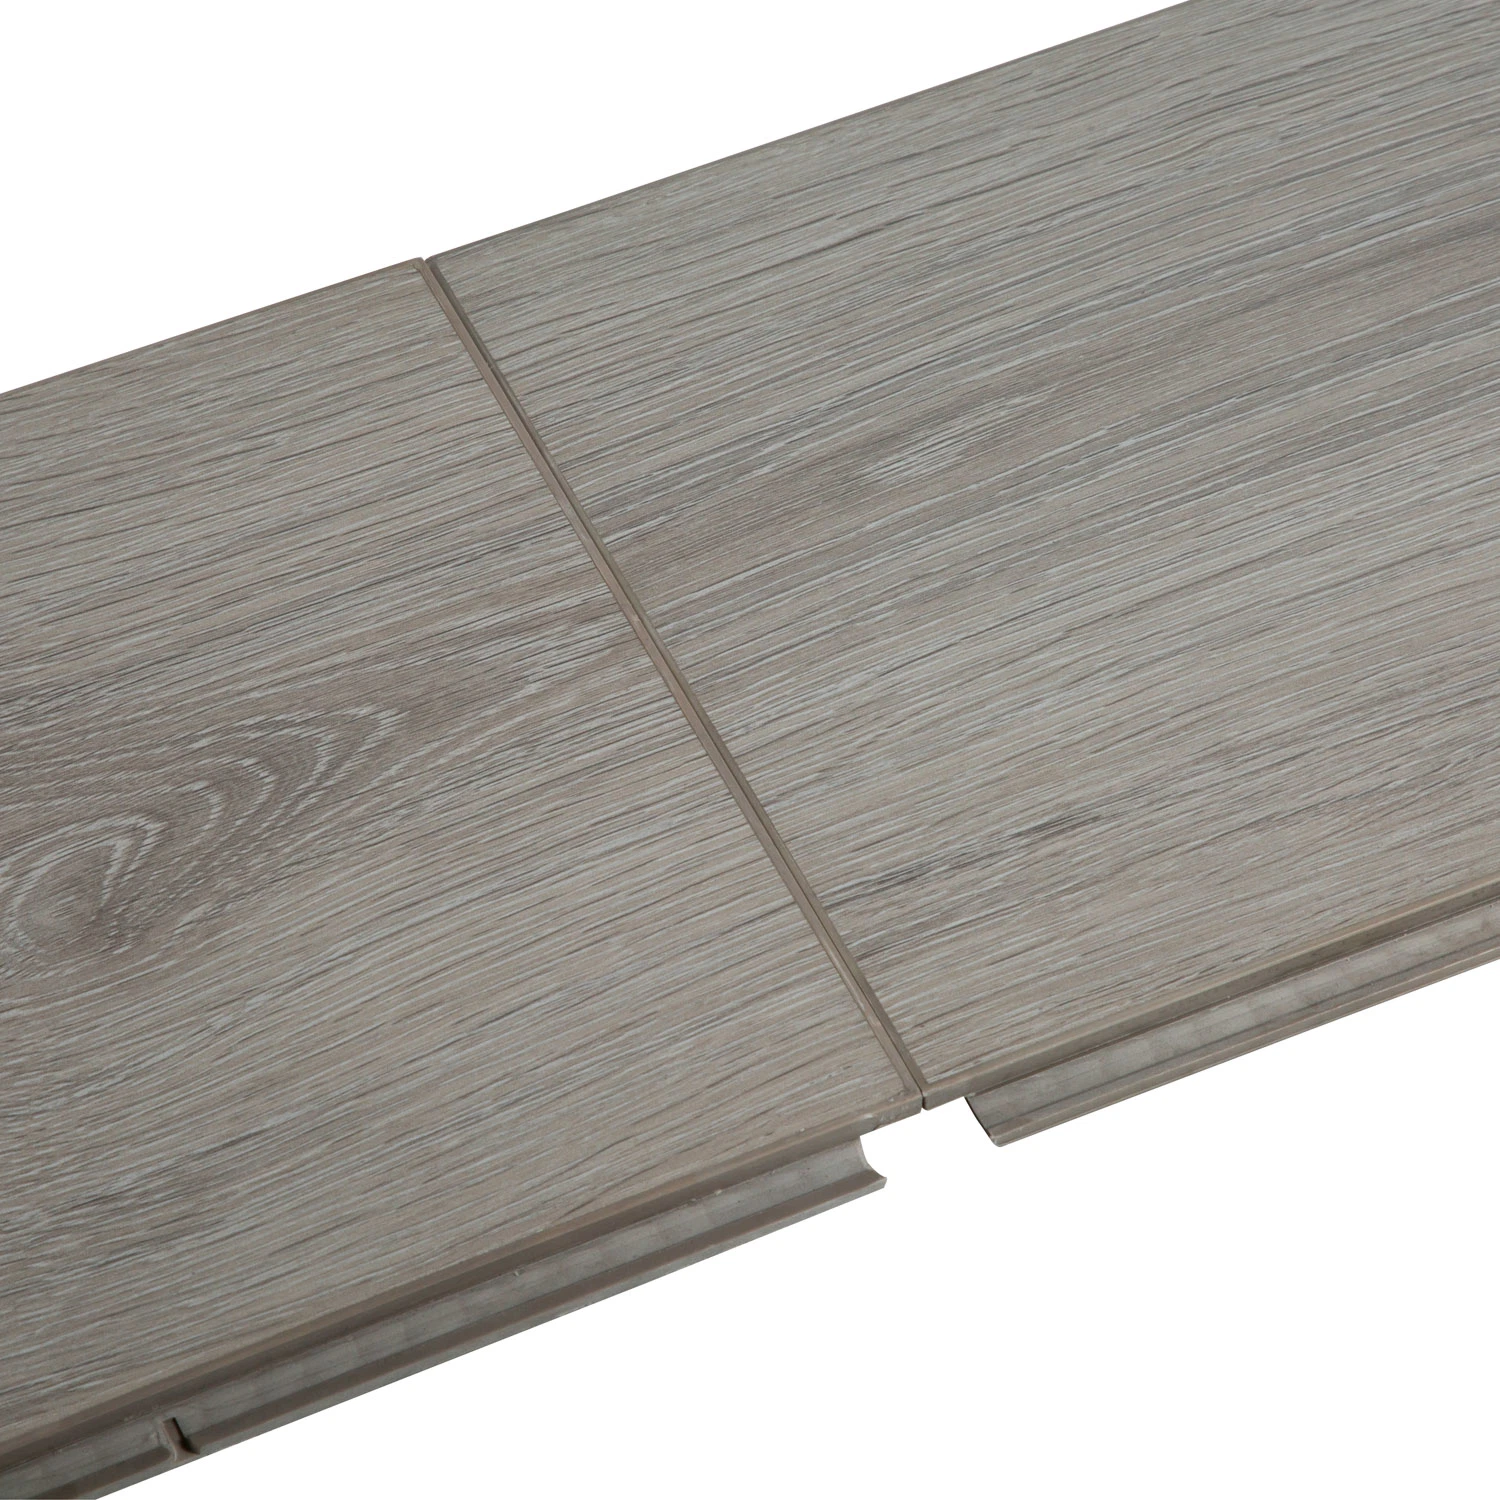 High Density Glossy Chinese Plastic Frame 12mm Waterproof MDF/HDF Wood Laminate Flooring